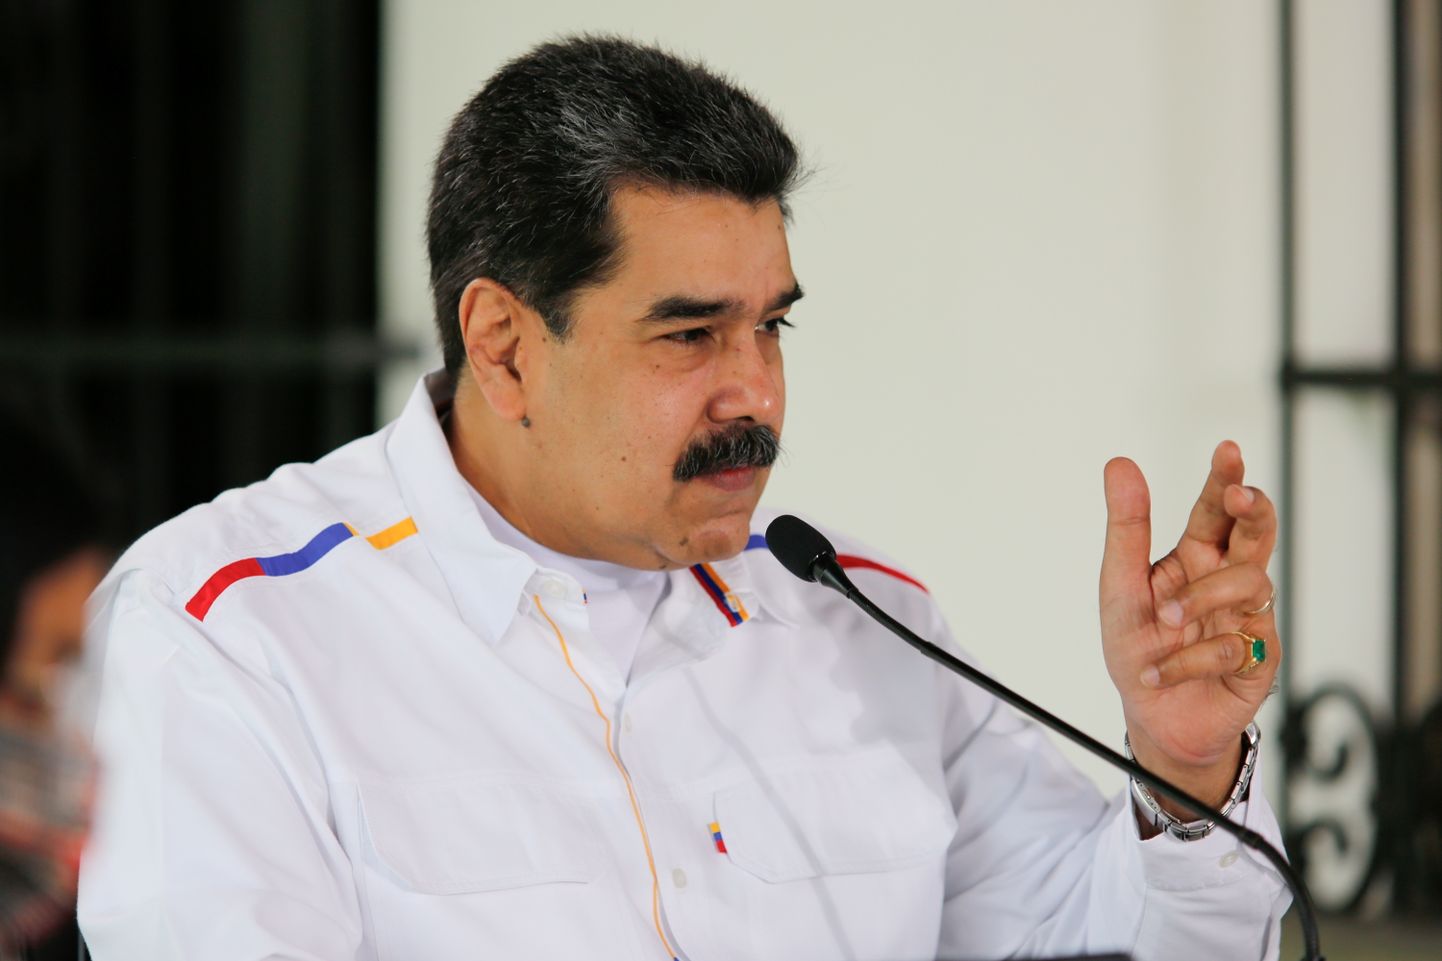 Venezuela president Nicolas Maduro.